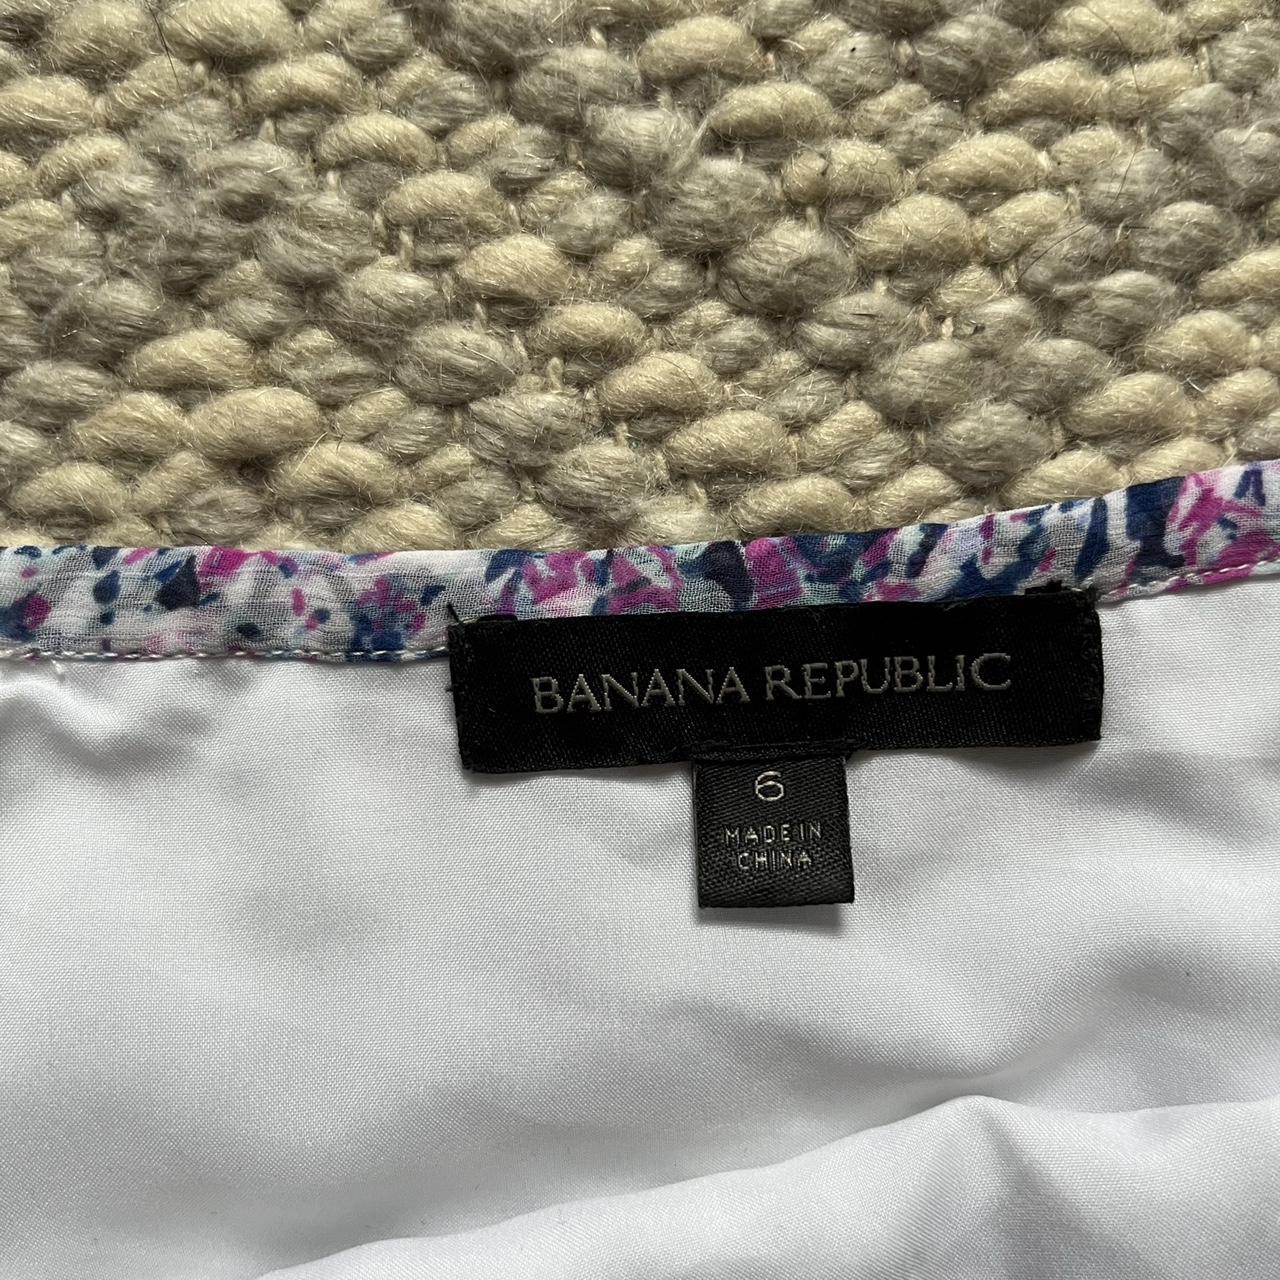 Banana republic patterned ruffle mini skirt Side... - Depop